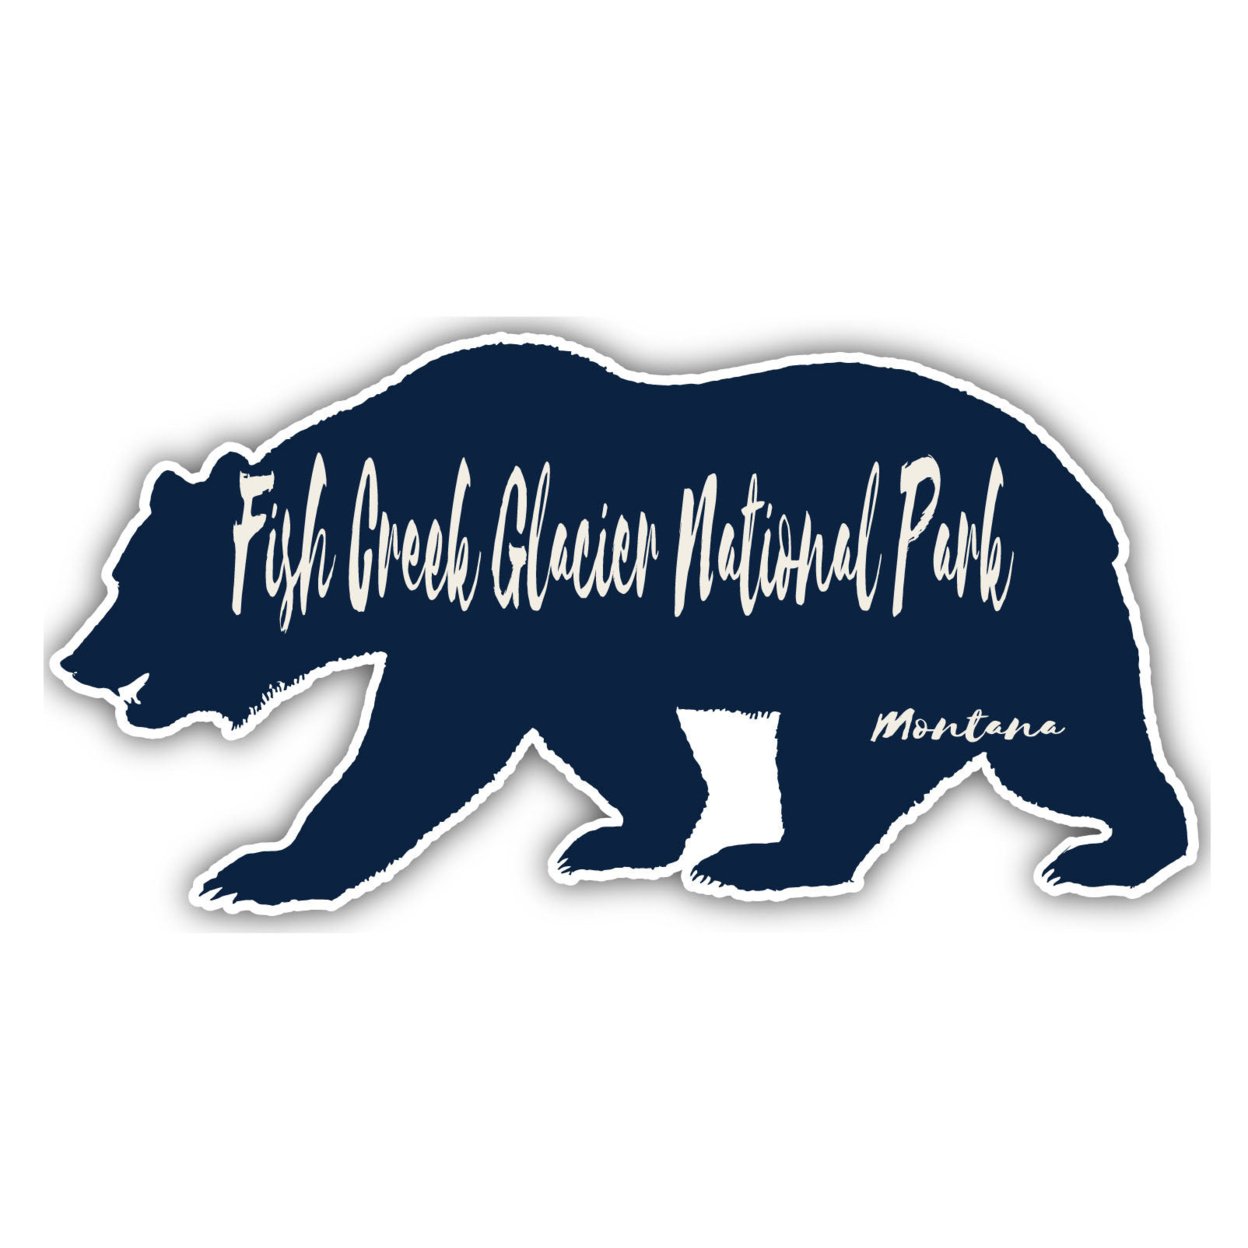 Fish Creek Glacier National Park Montana Souvenir Decorative Stickers (Choose Theme And Size) - Single Unit, 4-Inch, Bear